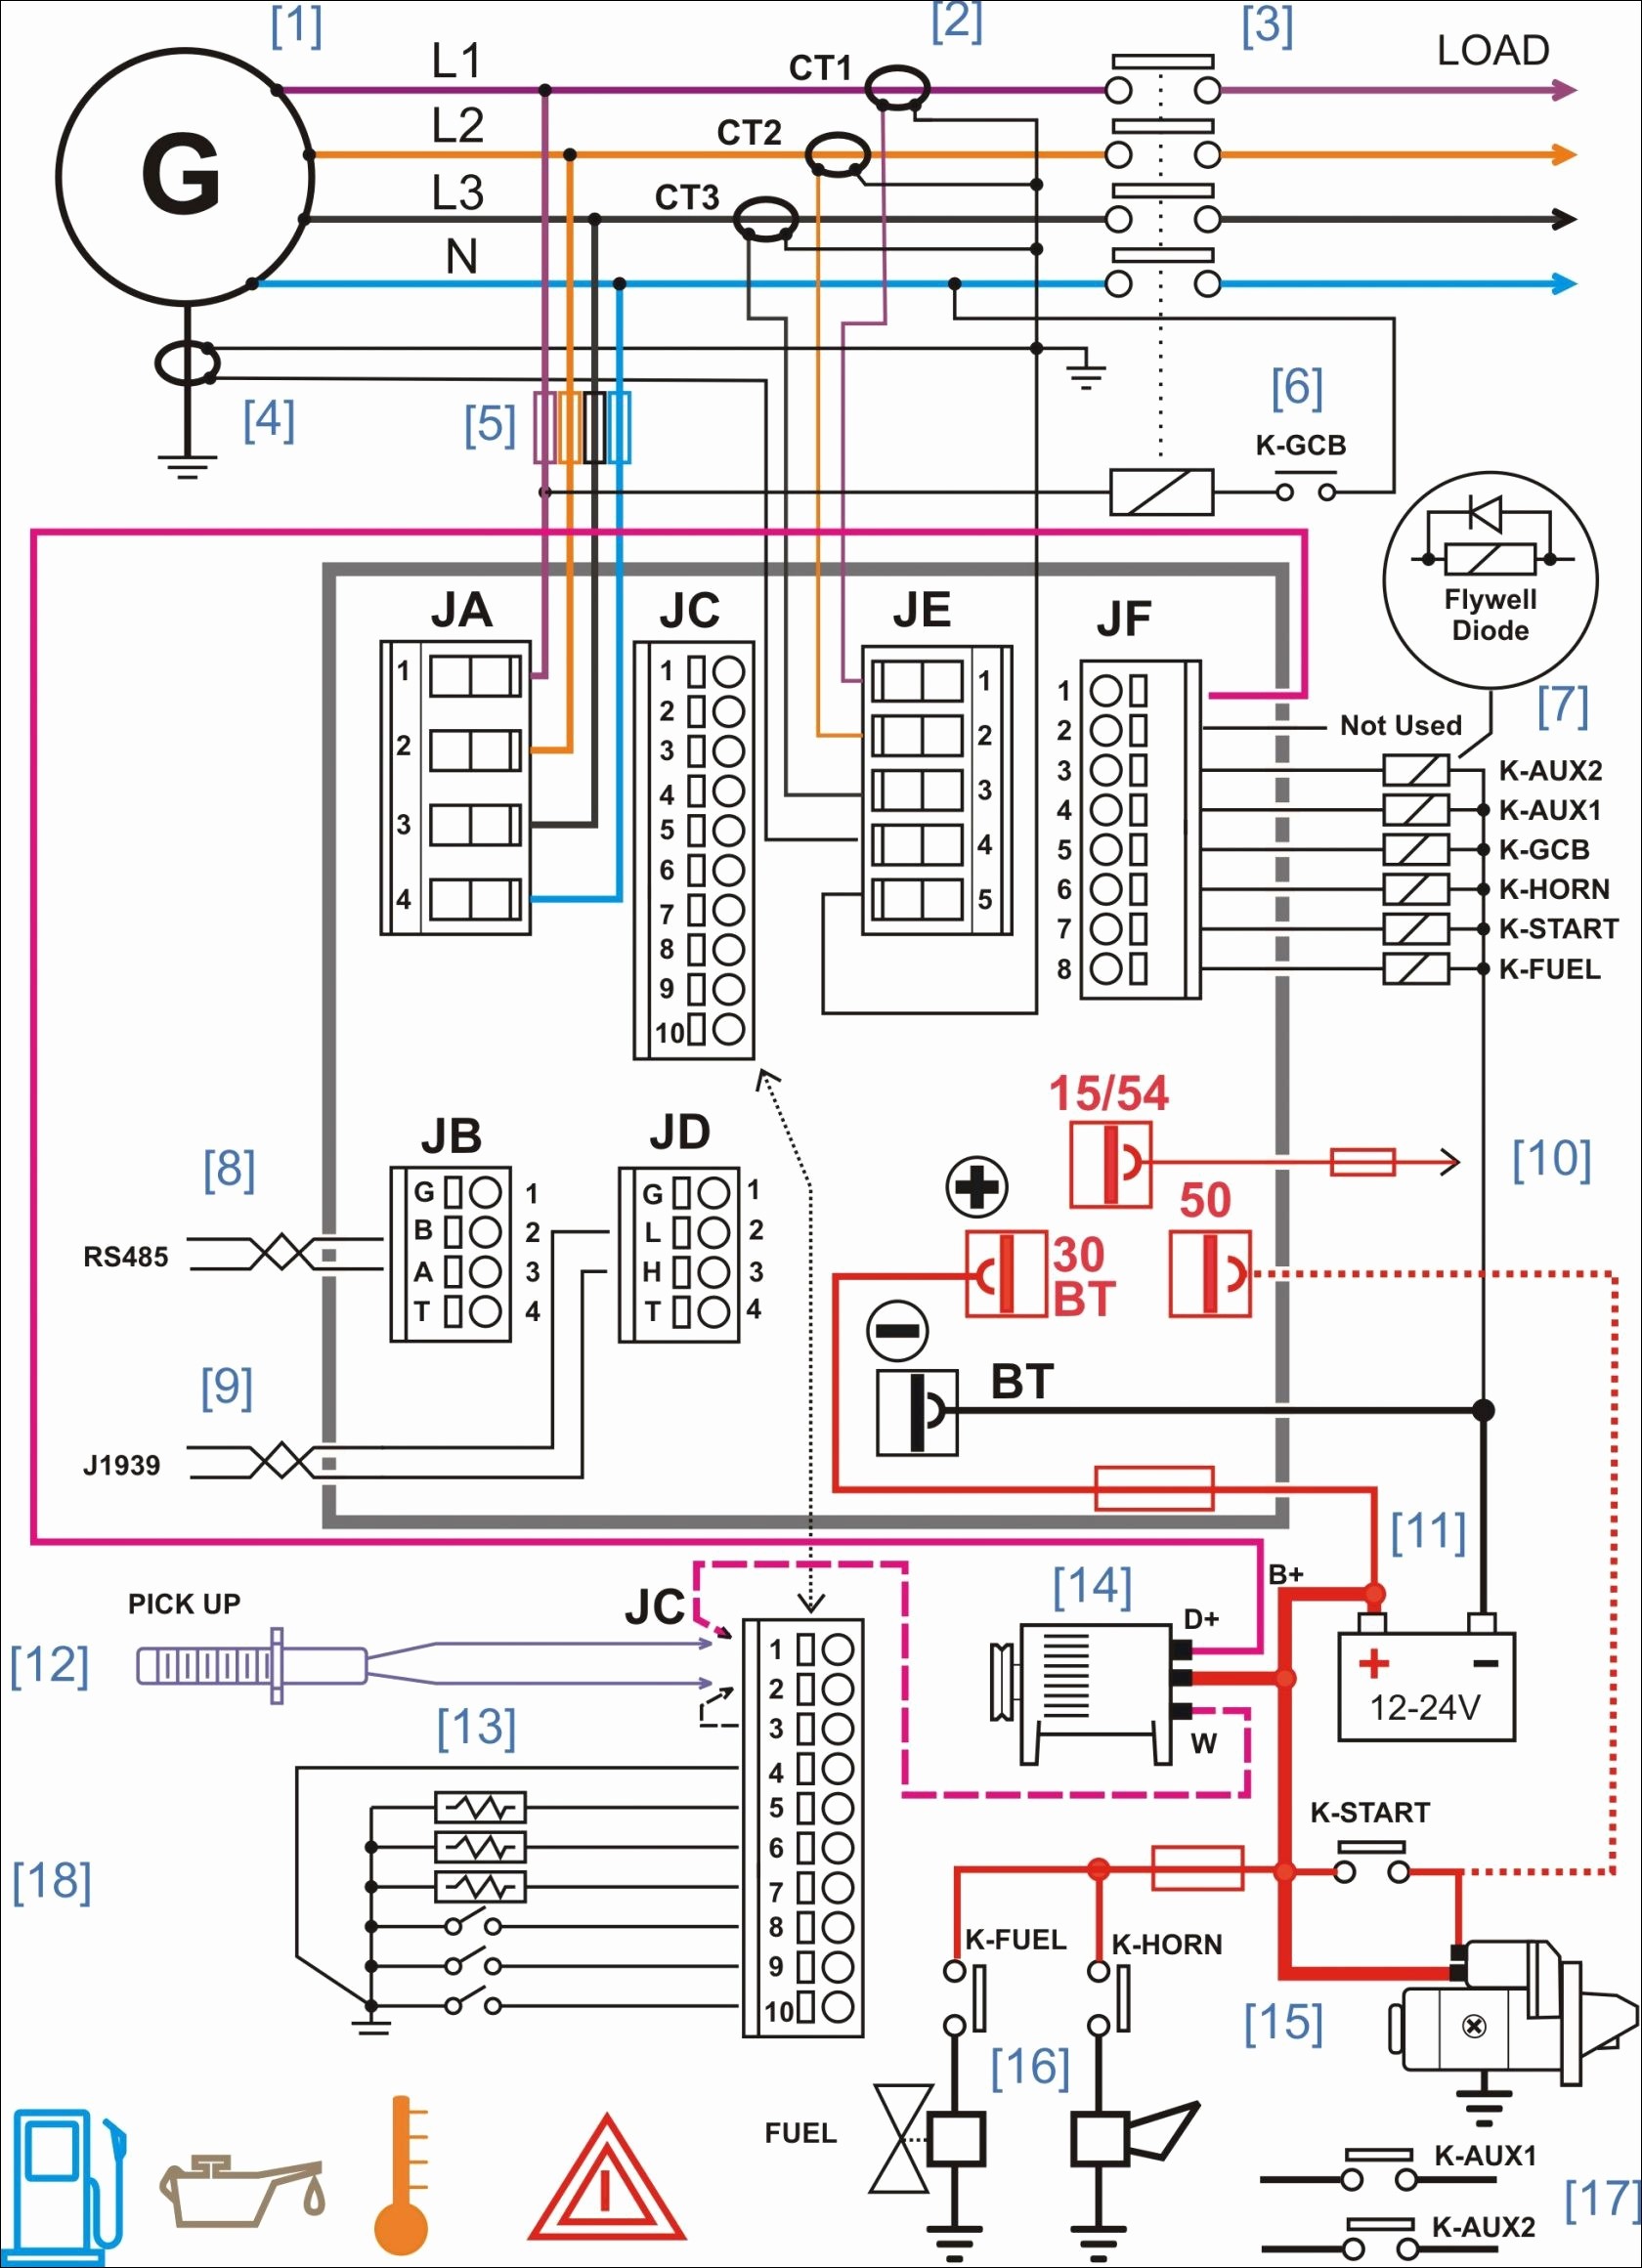 Powermaster Alternator Wiring Diagram Inspirational Delphi Concert Class Radio Wiring Diagram Wiring solutions